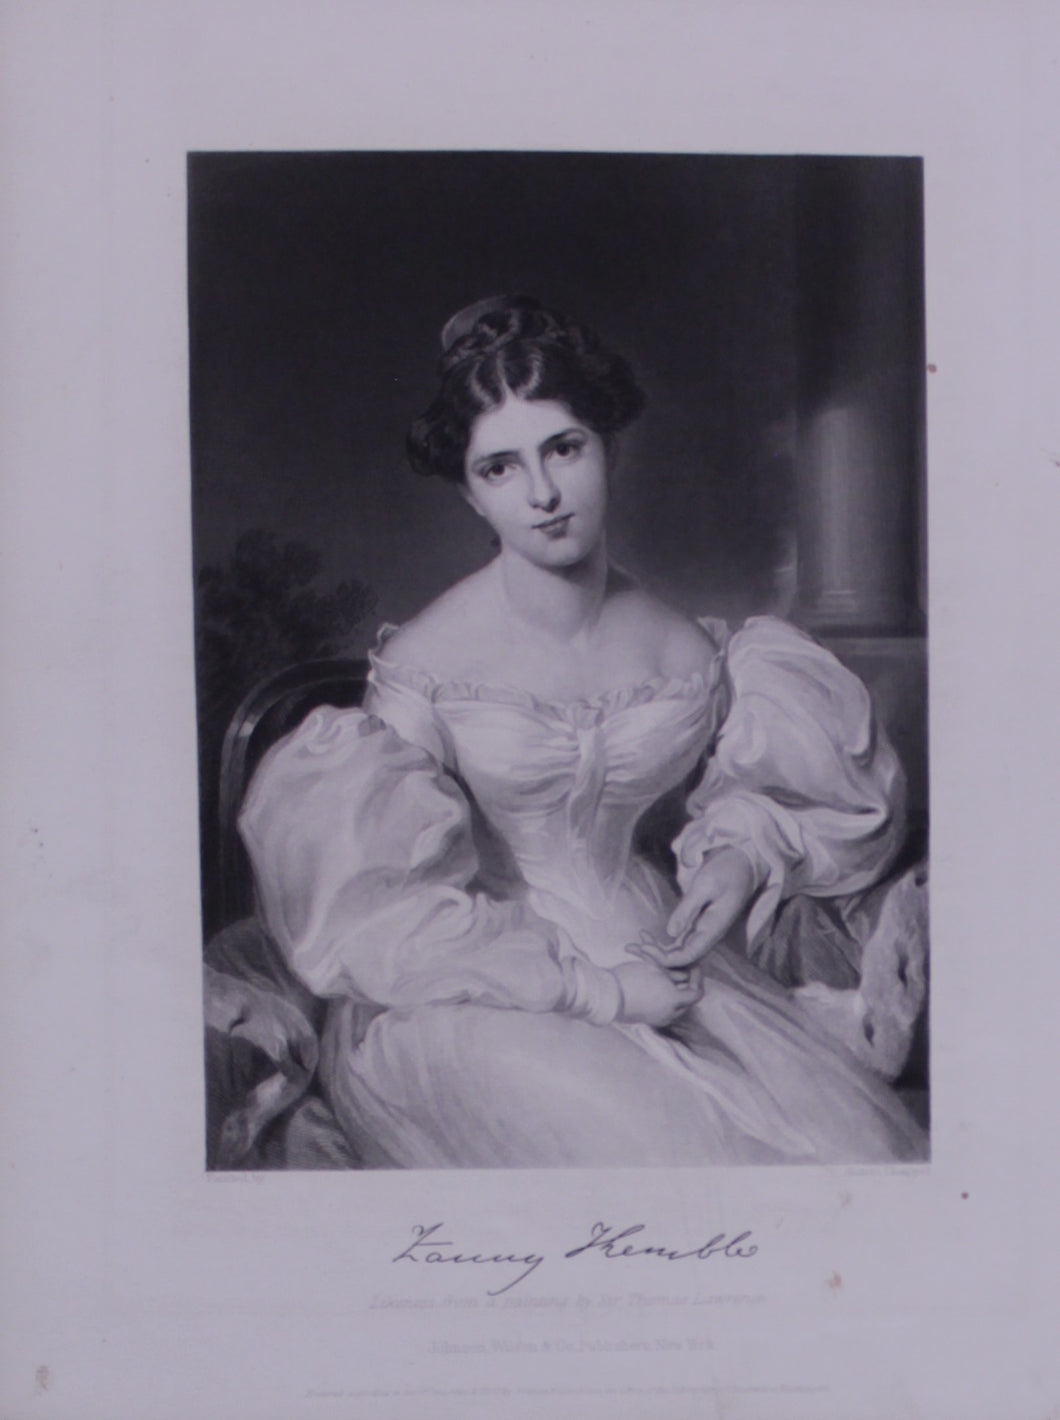 Portraits, Chappel, Laury Thimble, c1873